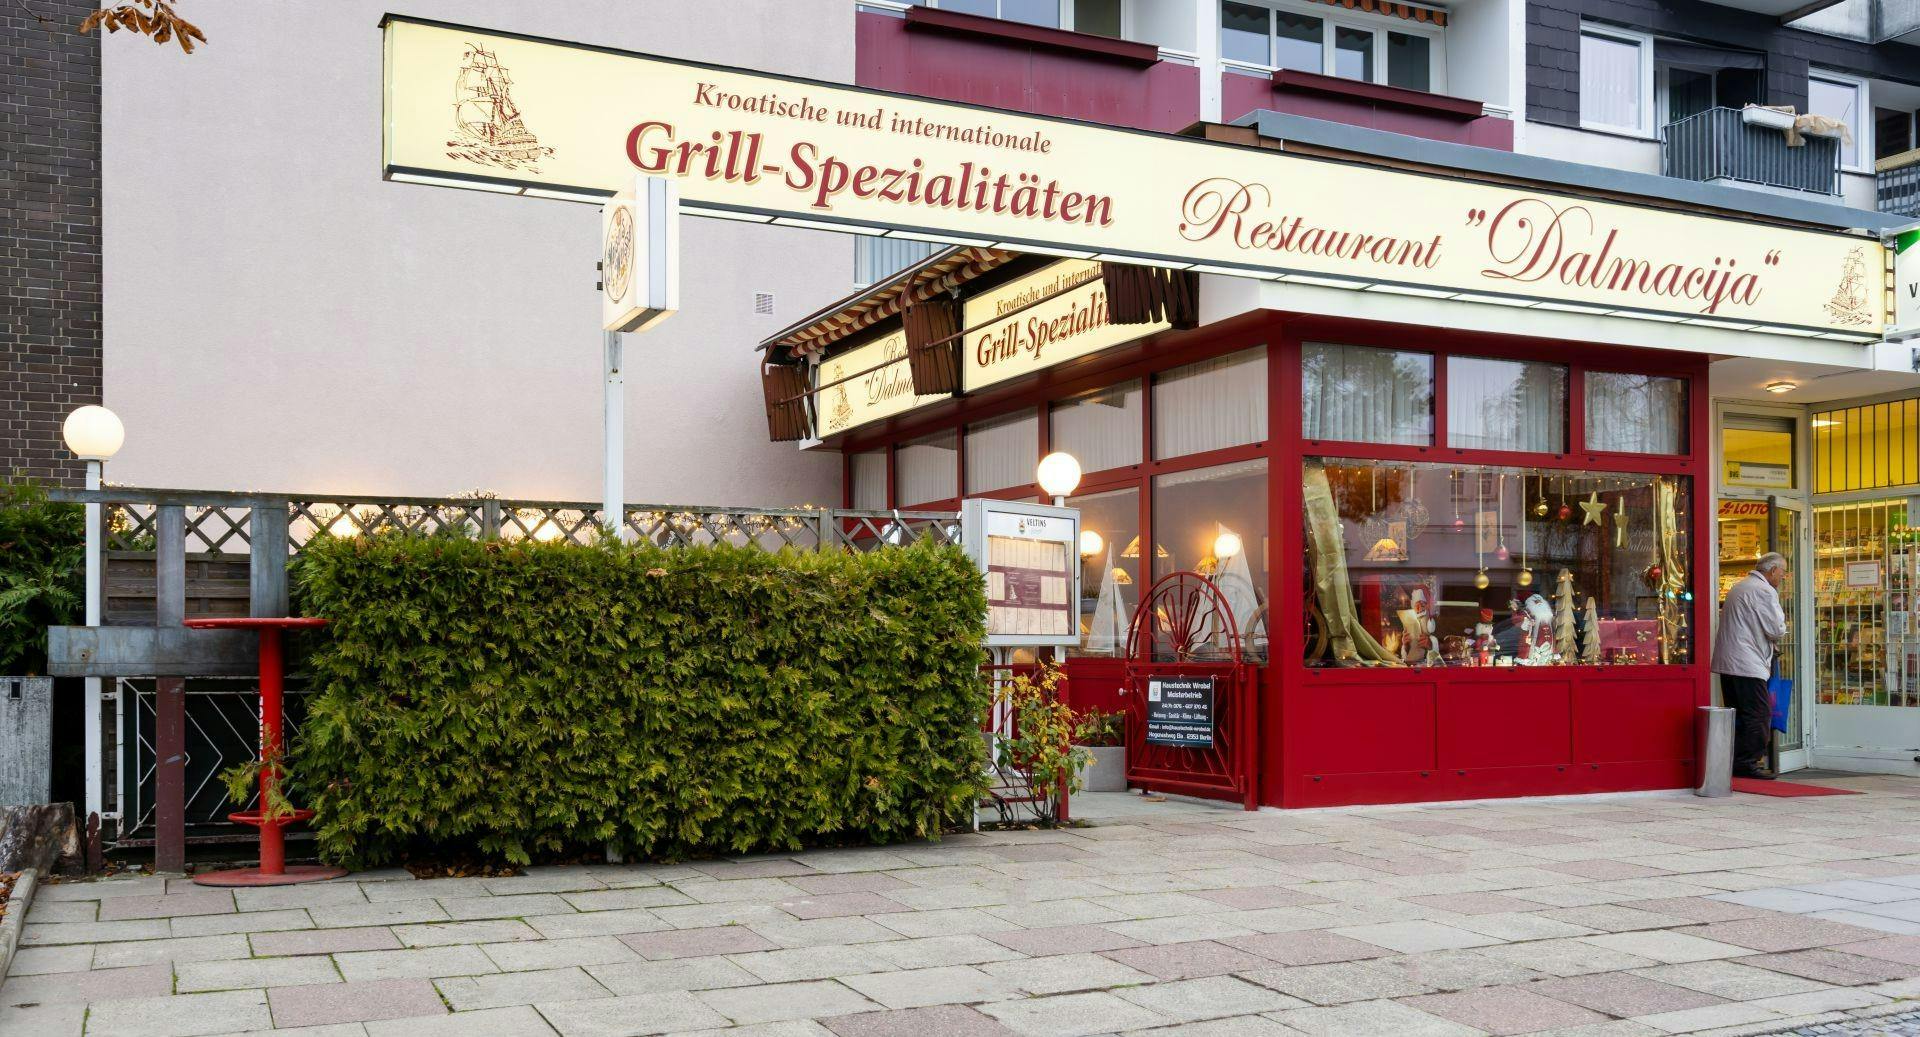 Photo of restaurant Dalmacija Restaurant in Marienfelde, Berlin